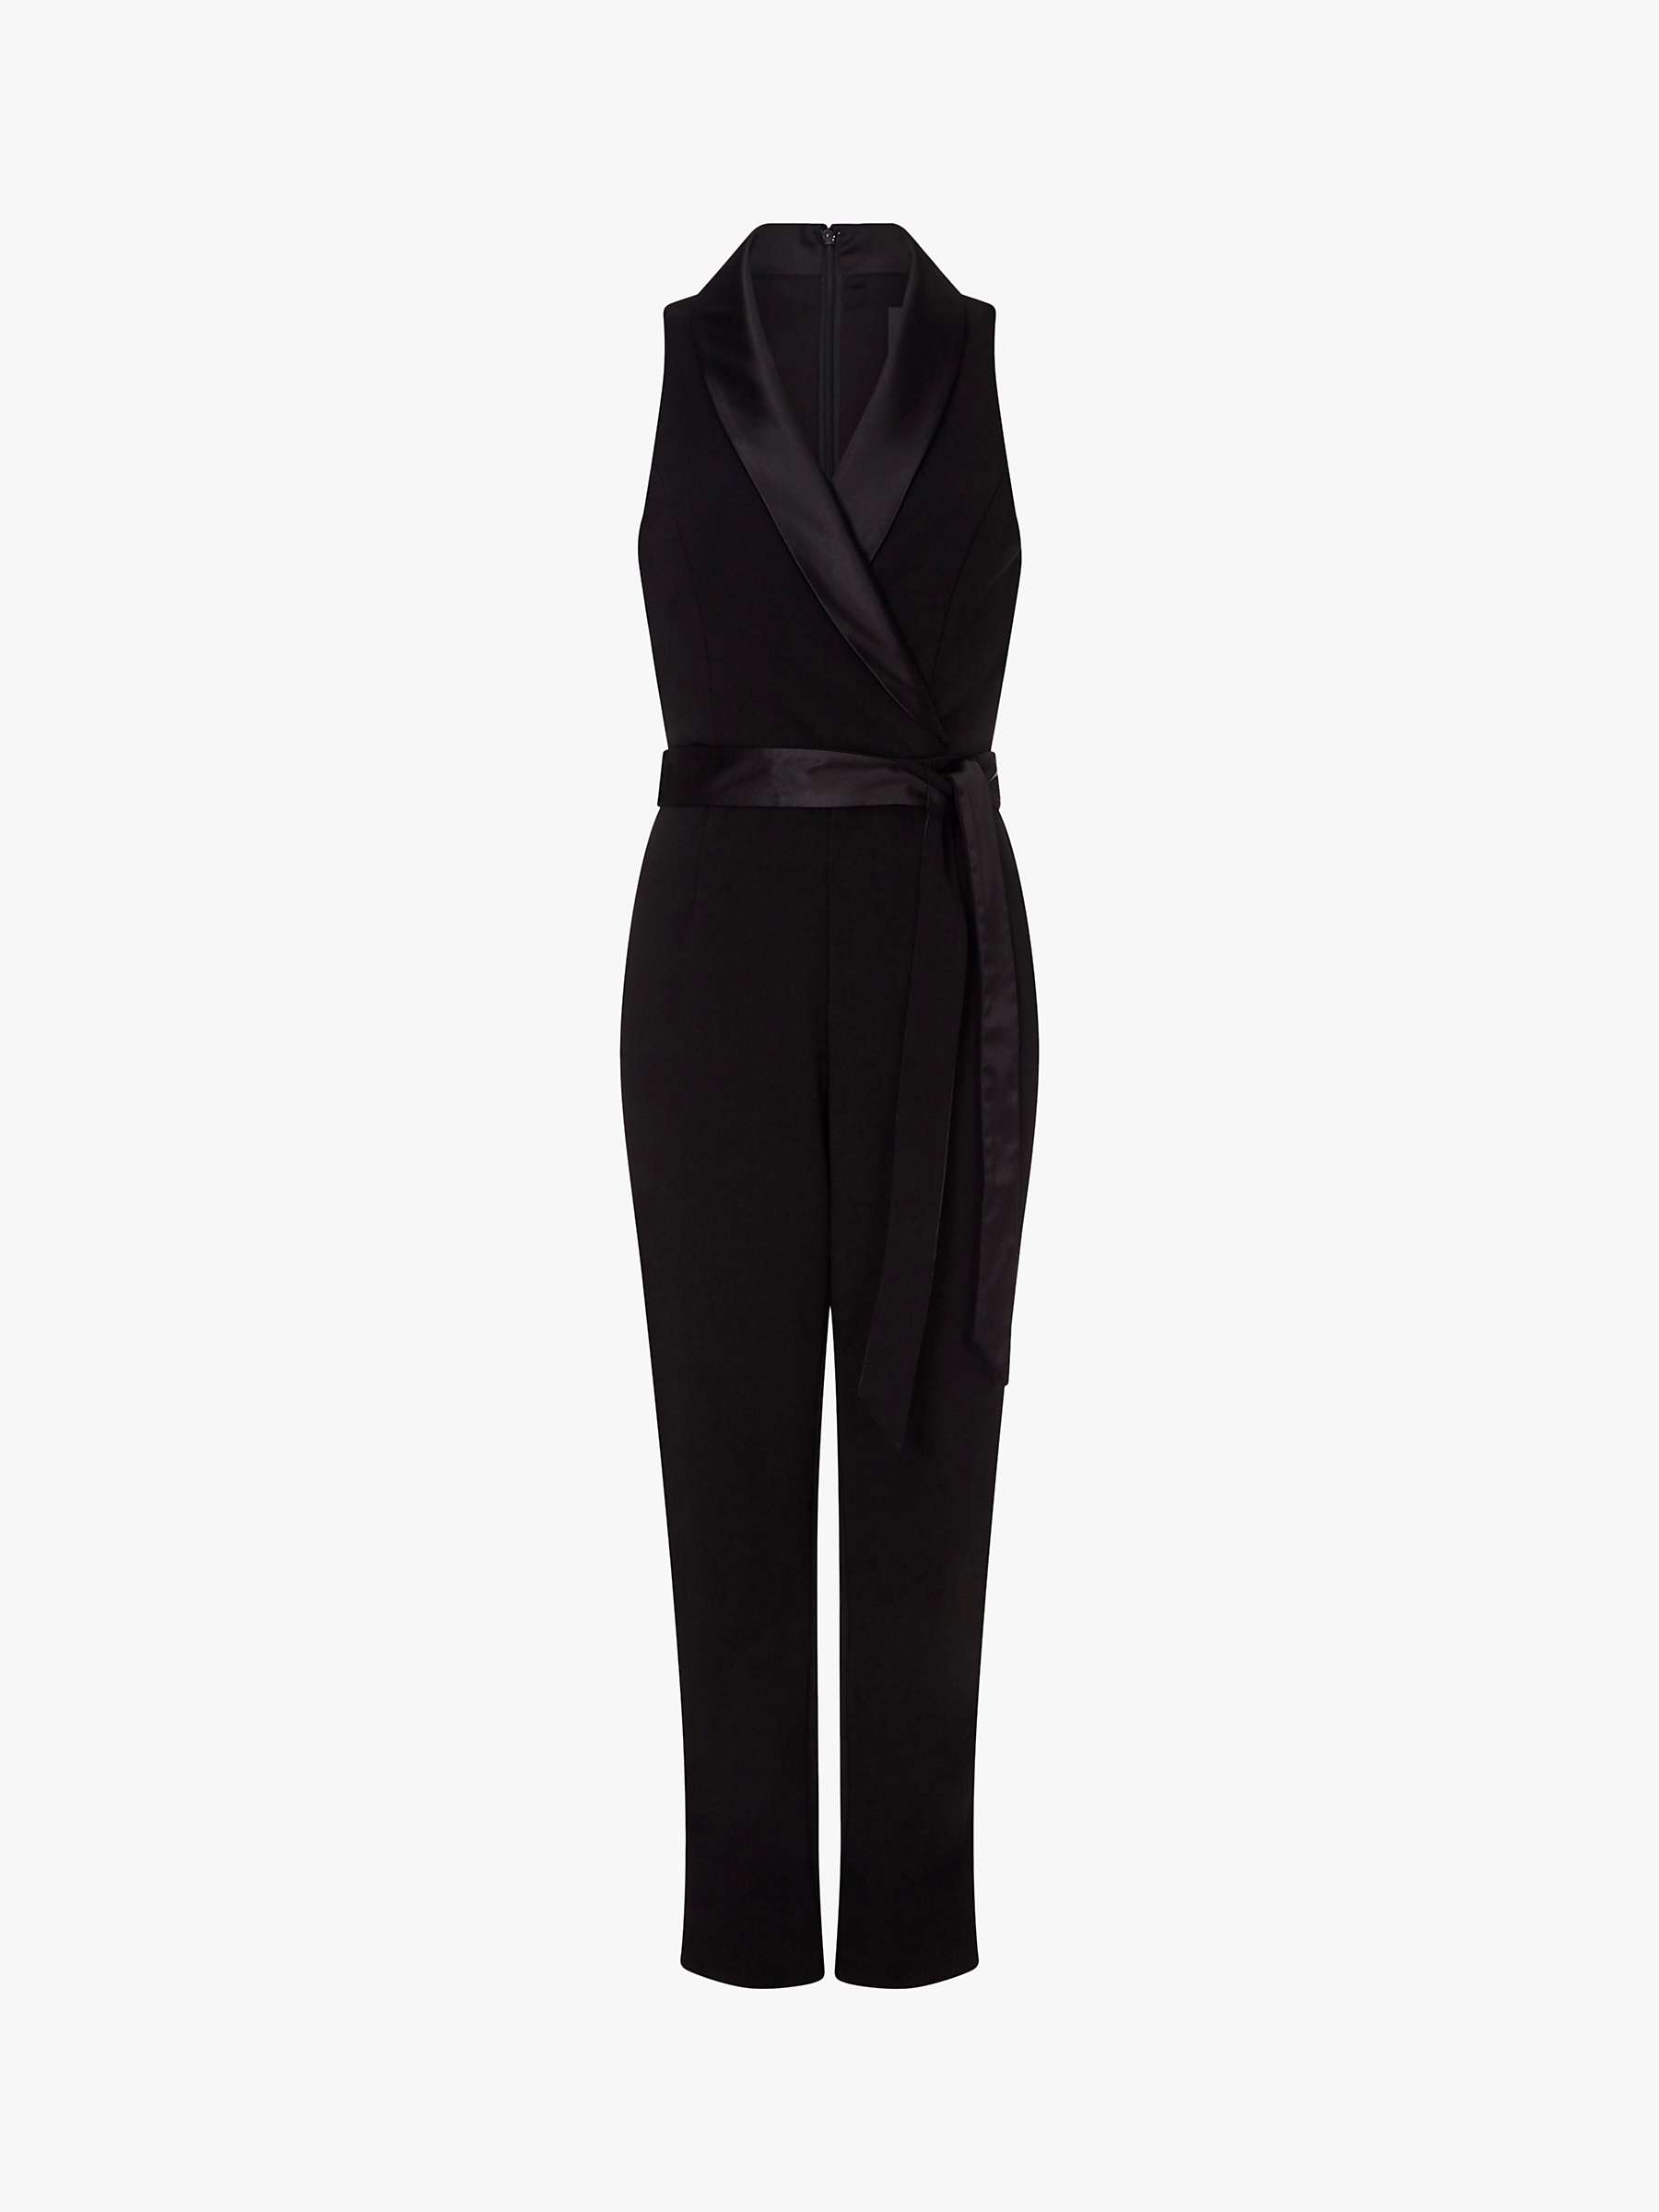 Buy Adrianna Papell Crepe Tuxedo Jumpsuit, Black Online at johnlewis.com